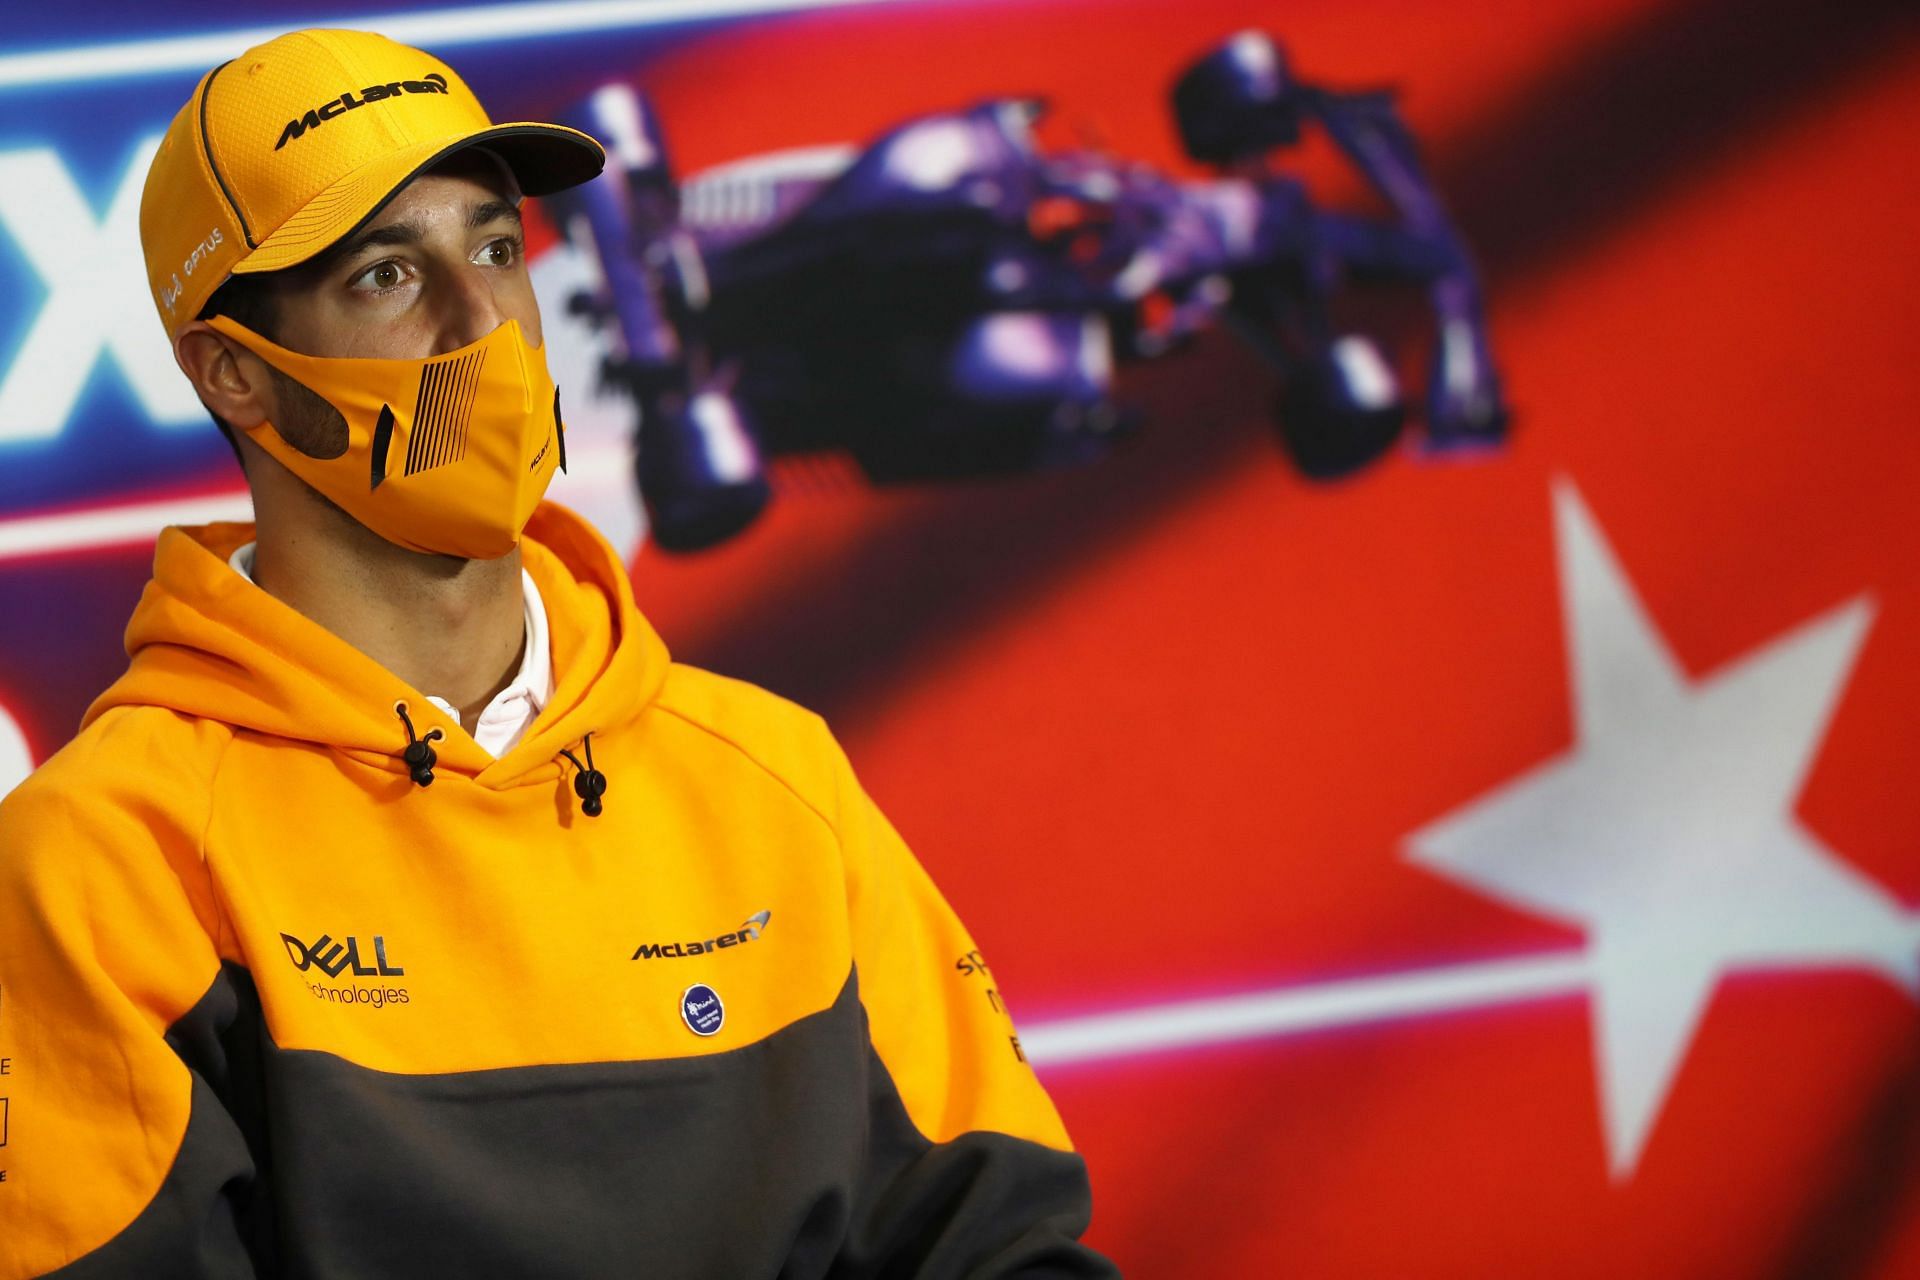 Daniel Ricciardo has had a torrid season with McLaren. Photo: Brynn Lennon/Getty Images